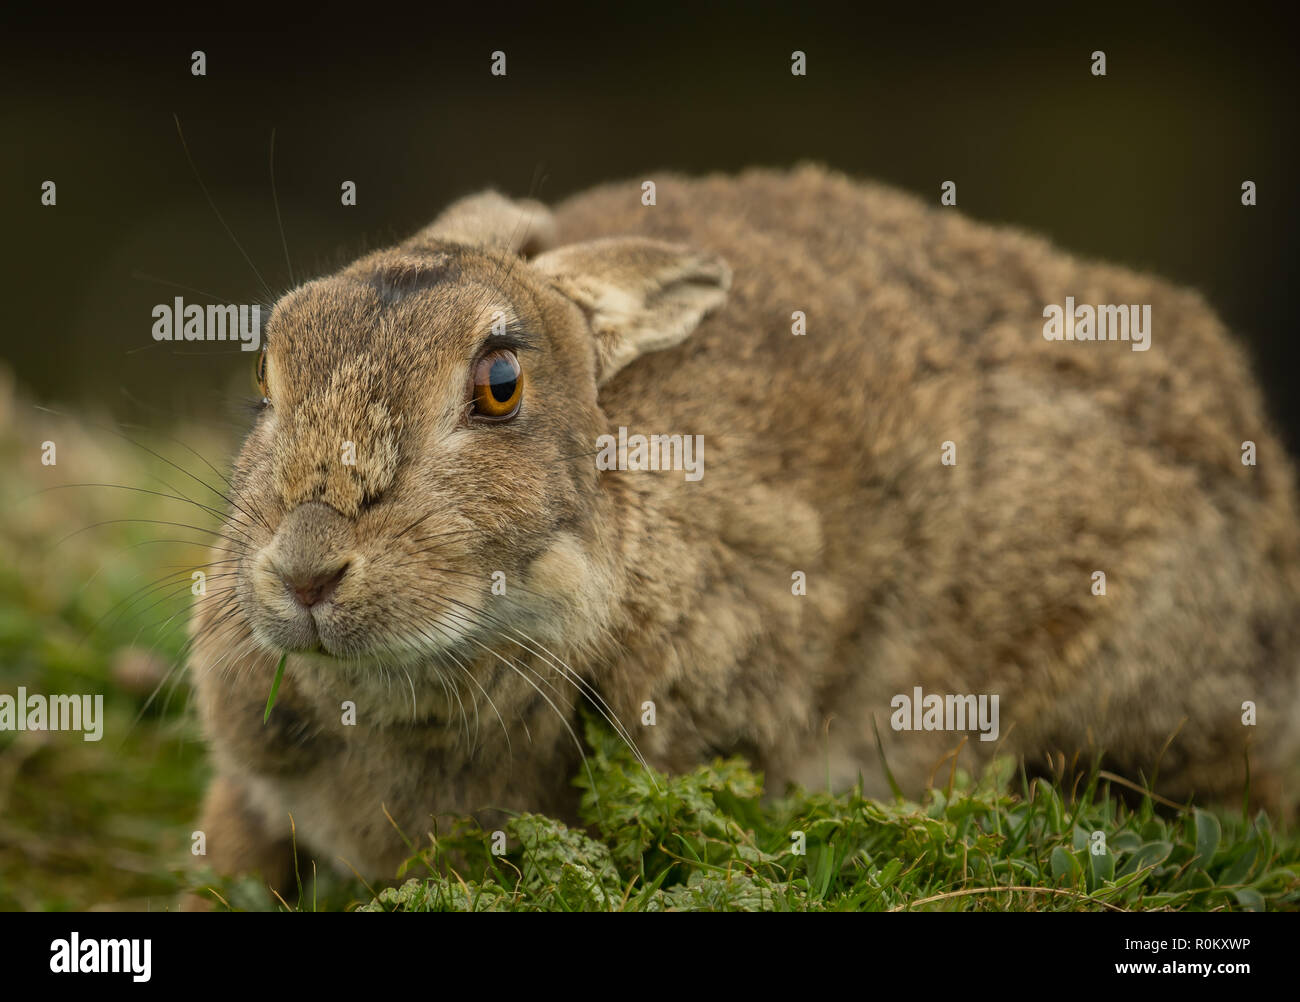 Rabbit, large, wild, adult rabbit in natural habitat on the Island of Lunga, Scotland, UK.  Facing left. Scientific name: Oryctolagus cuniculus Stock Photo